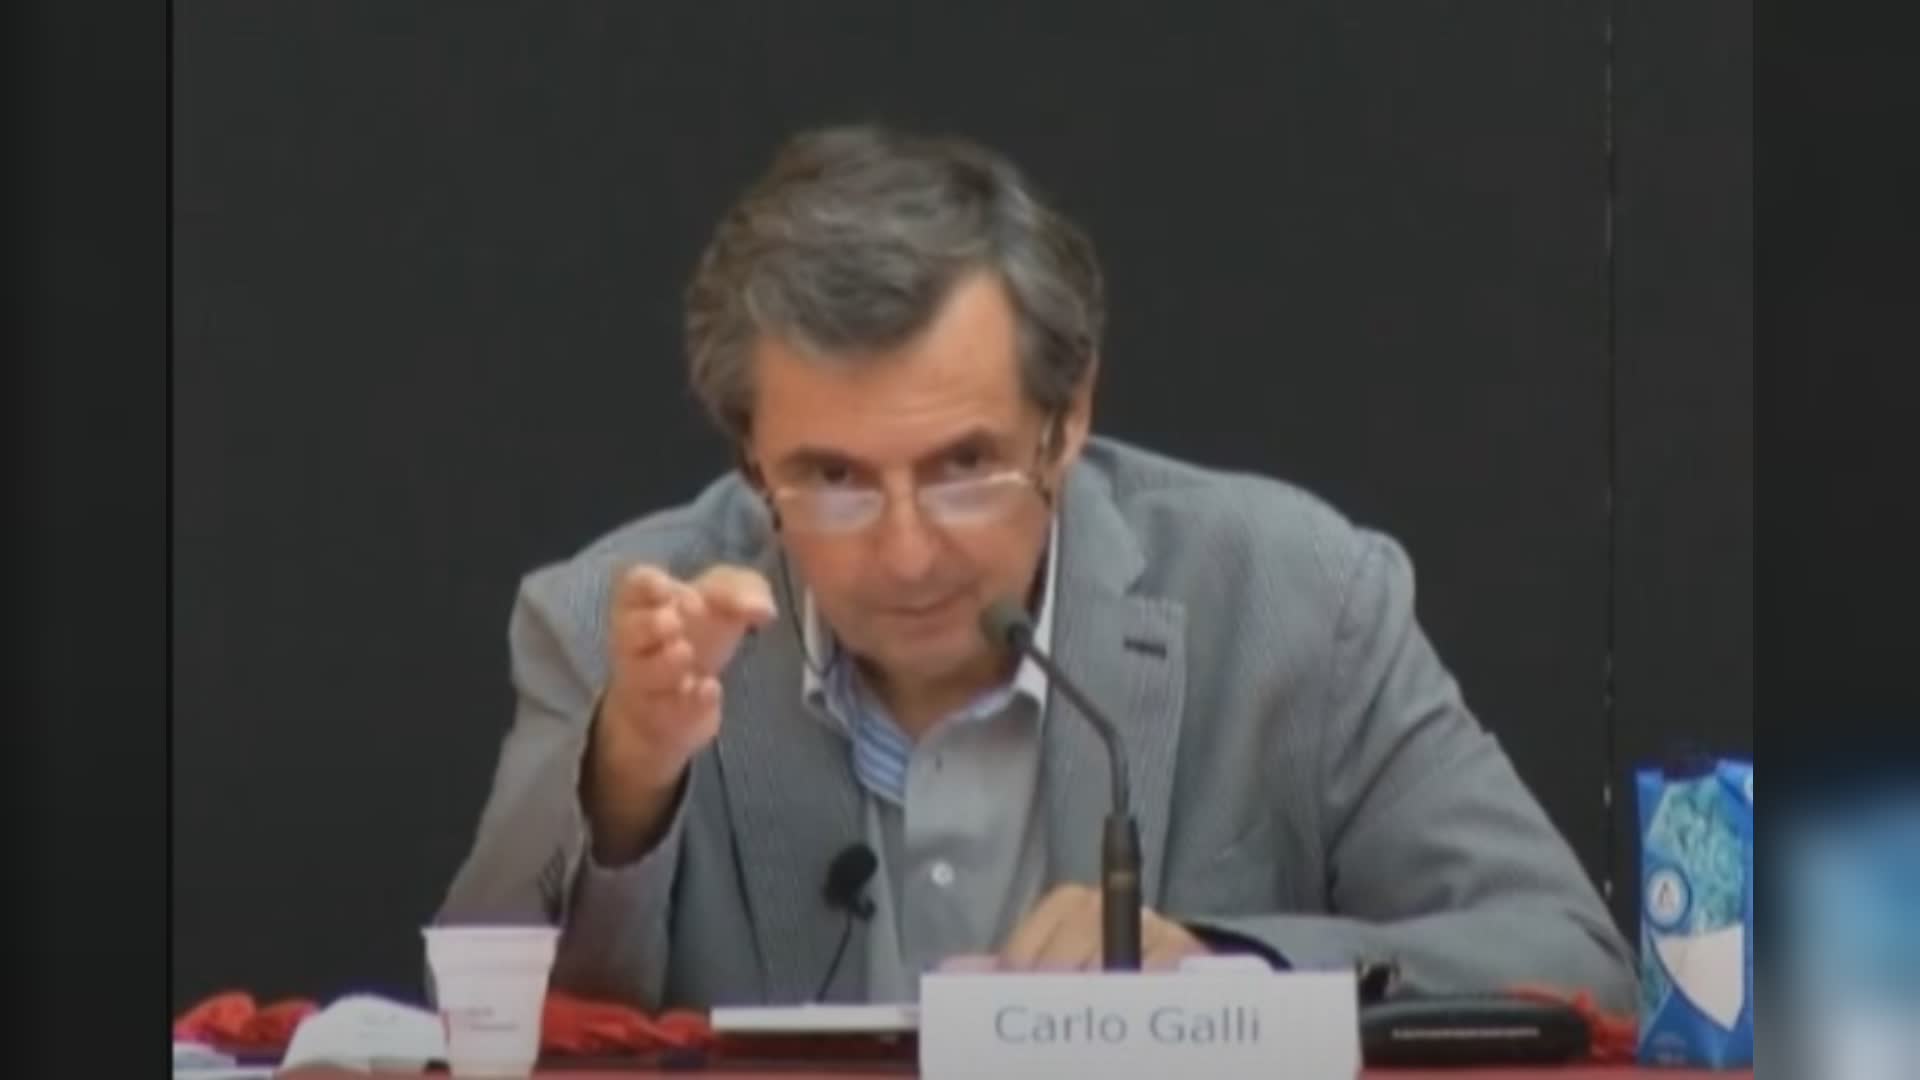 Santa Margherita Ligure, al politologo Carlo Galli il premio "Isaiah Berlin" 2023